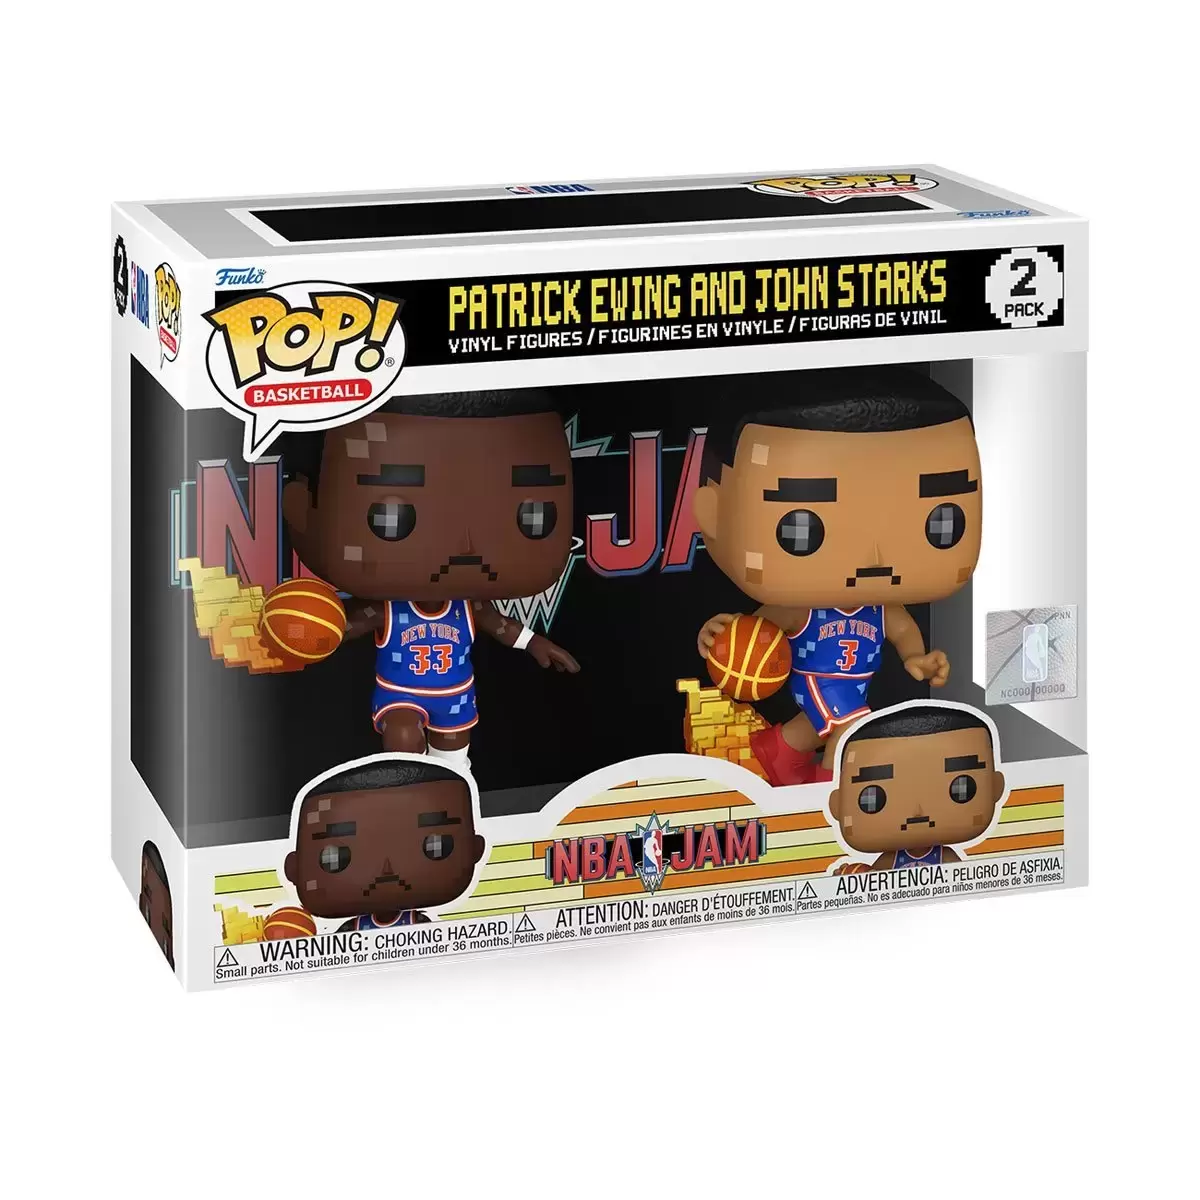 POP! Sports/Basketball - NBA Jam - Patrick Ewing And John Starks 2 Pack